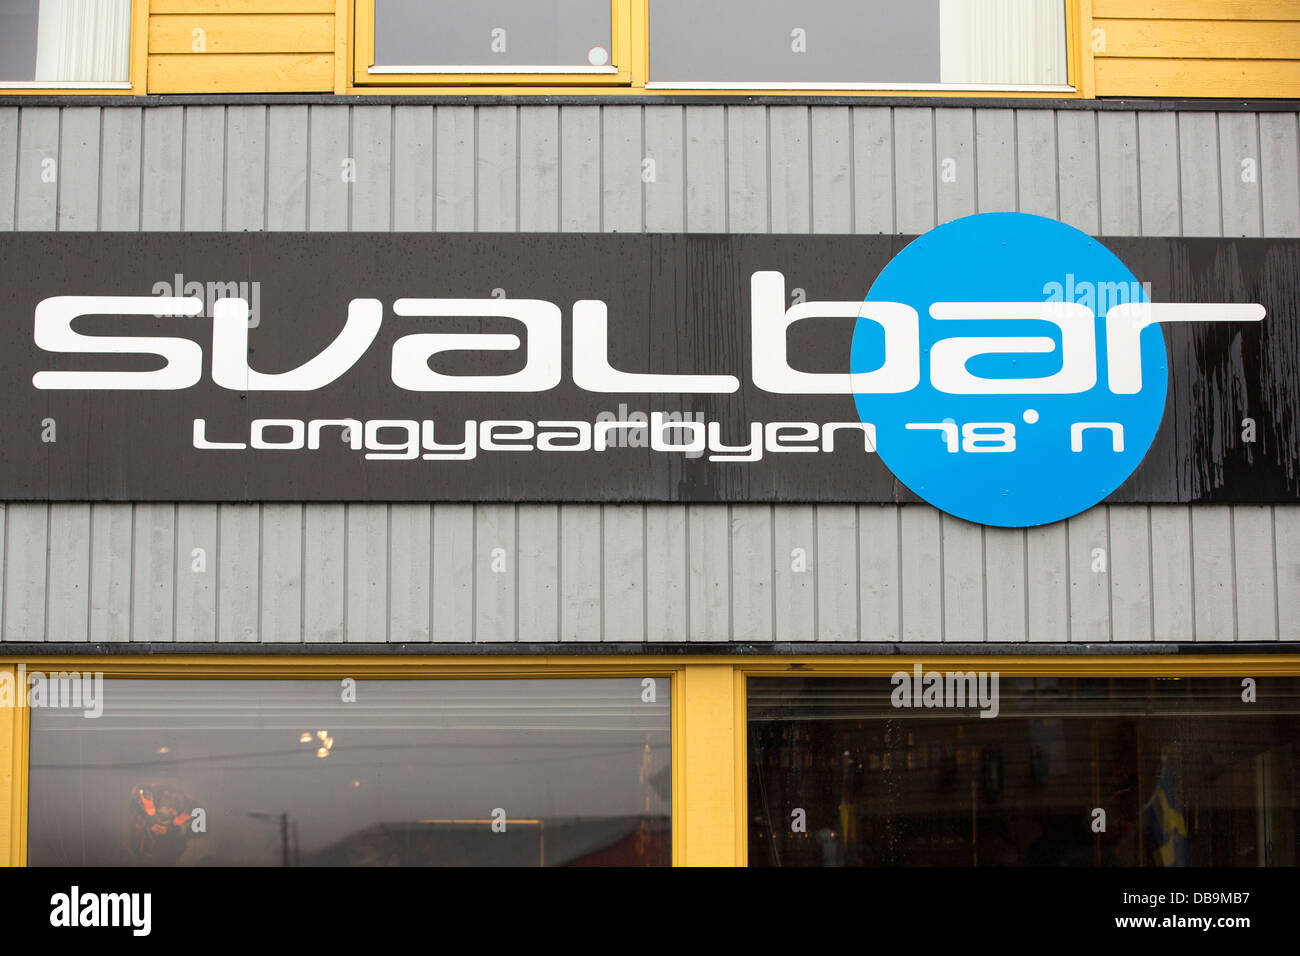 A bar in Longyearbyen, Spitsbergen, Svalbard, with its latitude and longitude written on it Stock Photo